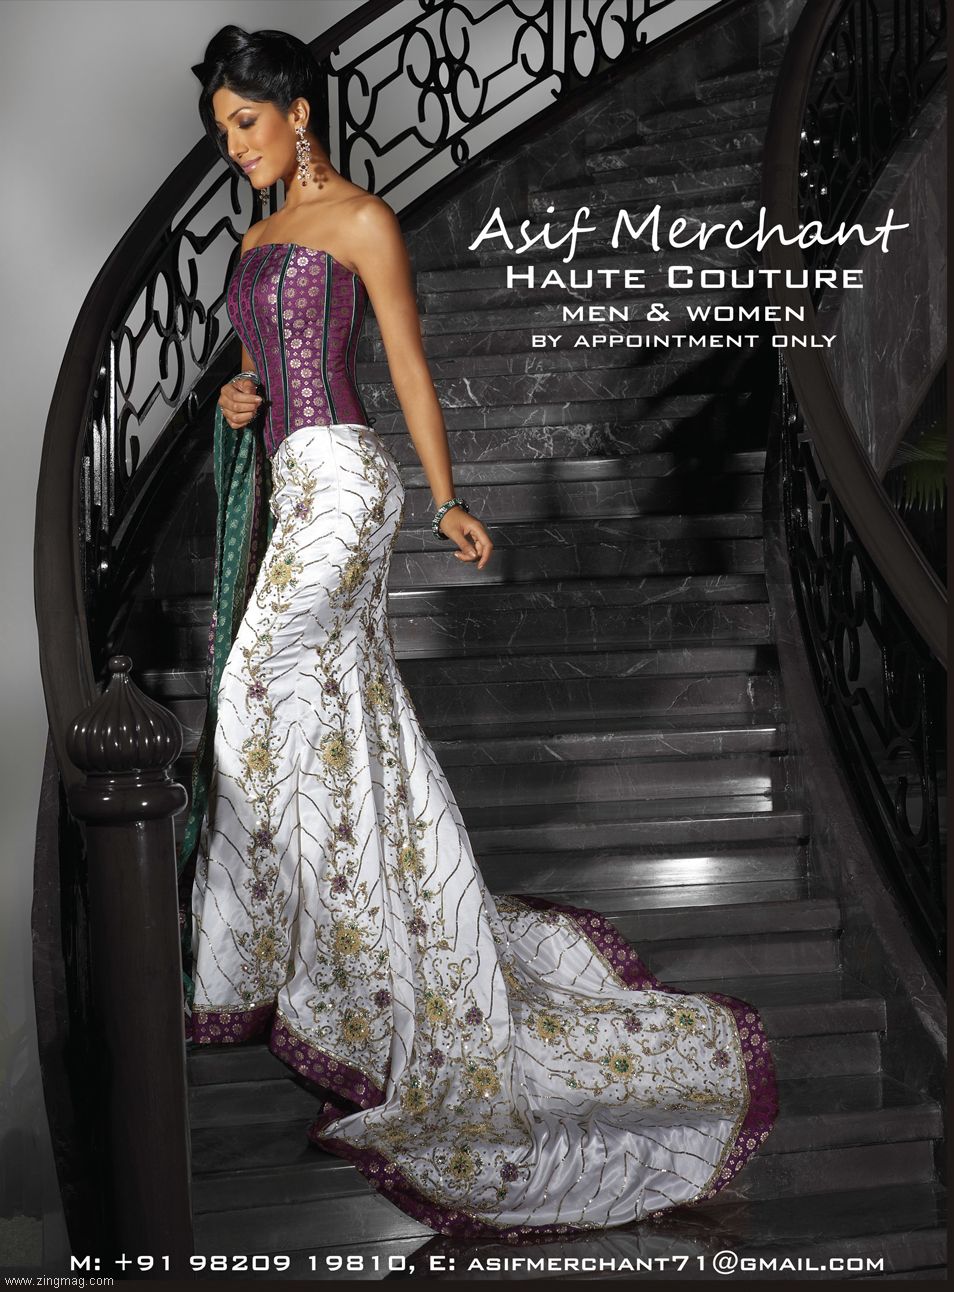 Asif Merchant's haute couture advertisement